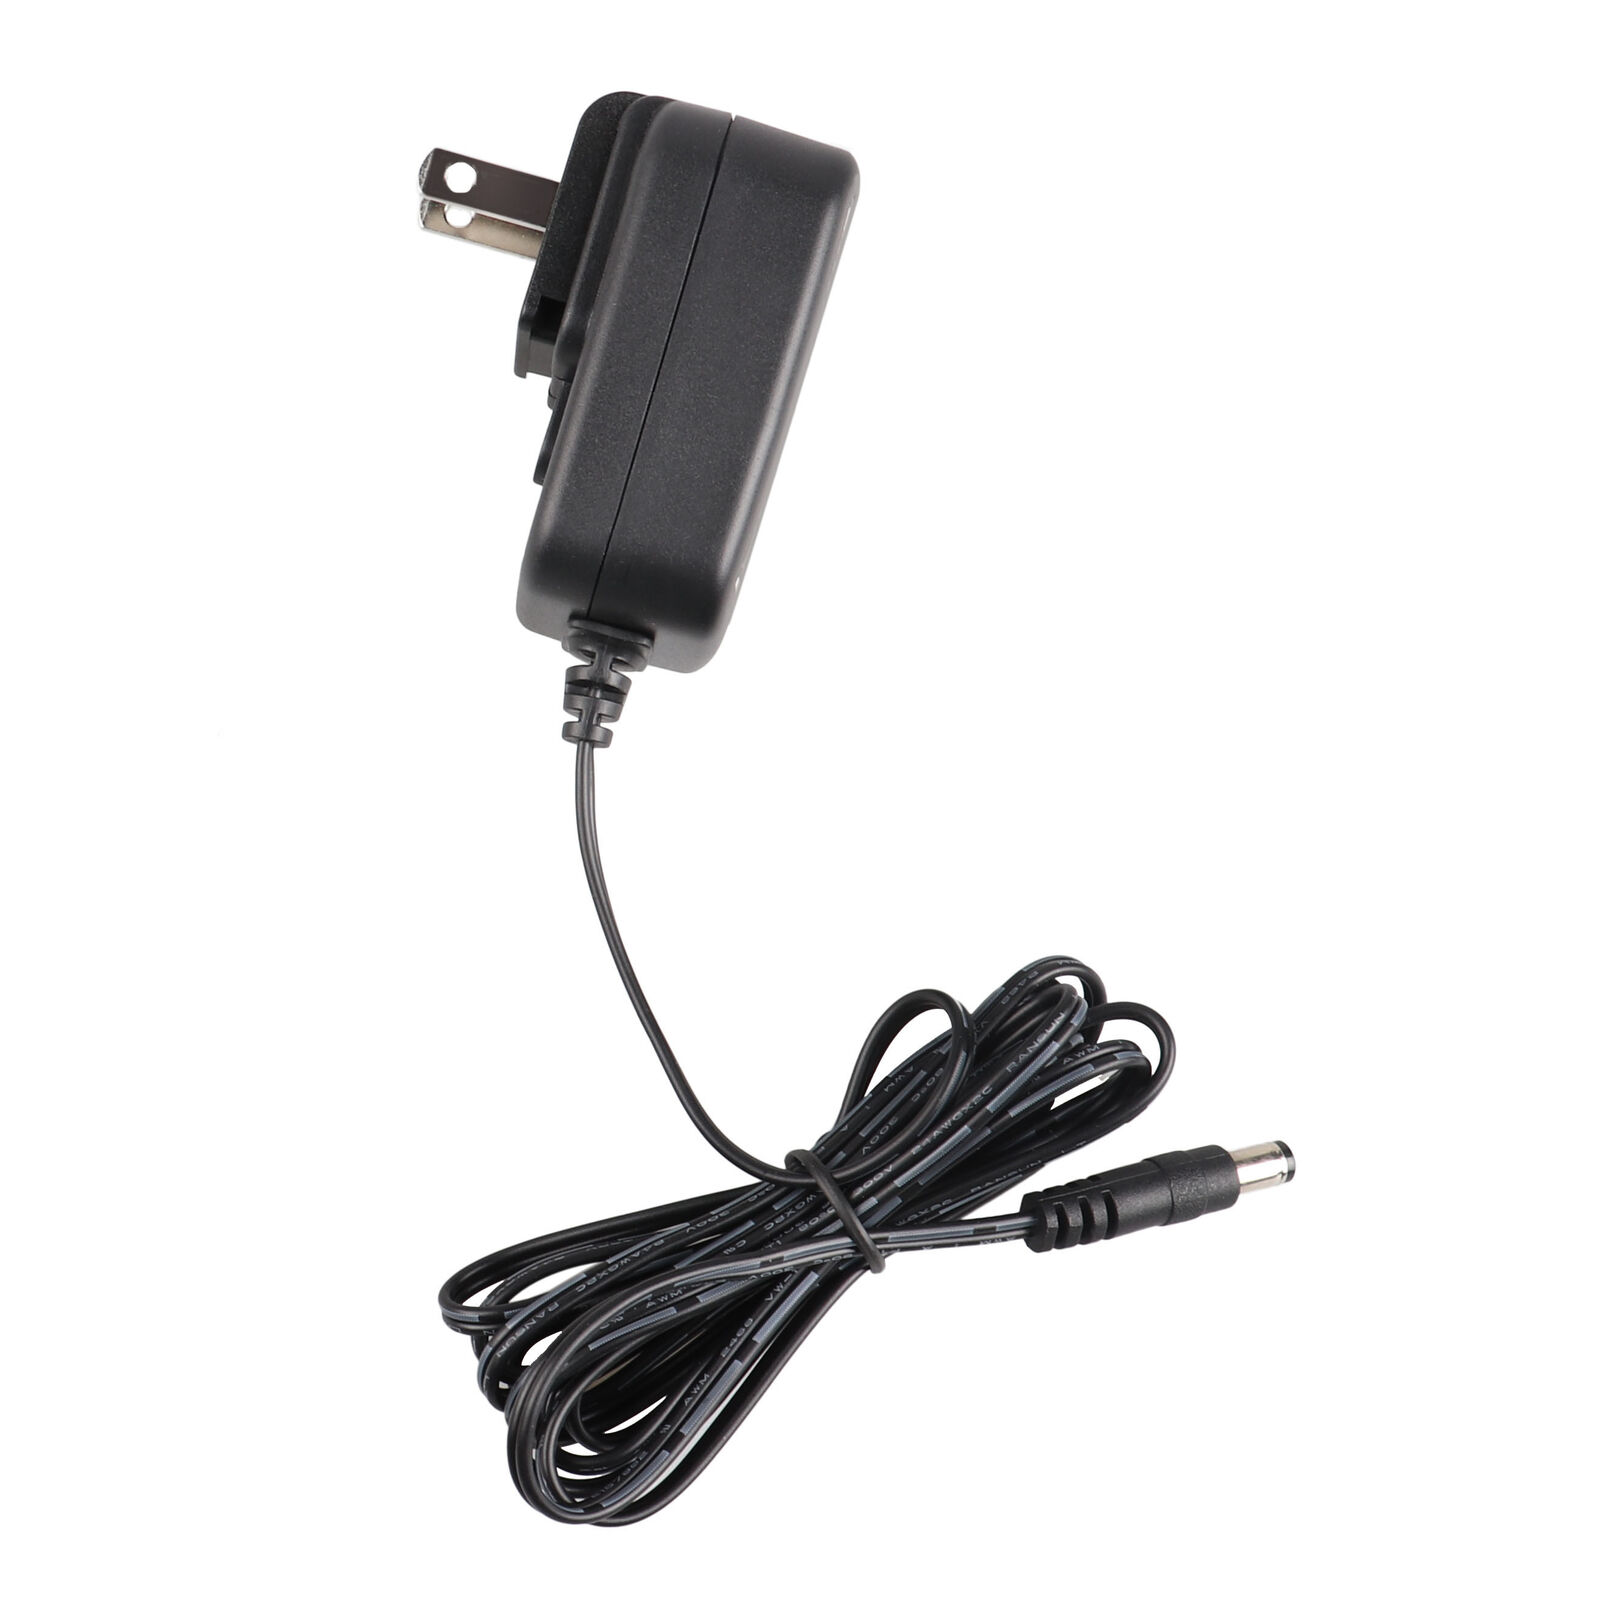 21W Power Cord Replacement for Alexa Echo Show (1st Gen), Echo Plus (1st Gen), Fire TV (2nd Gen) - AC Charger Power Adap